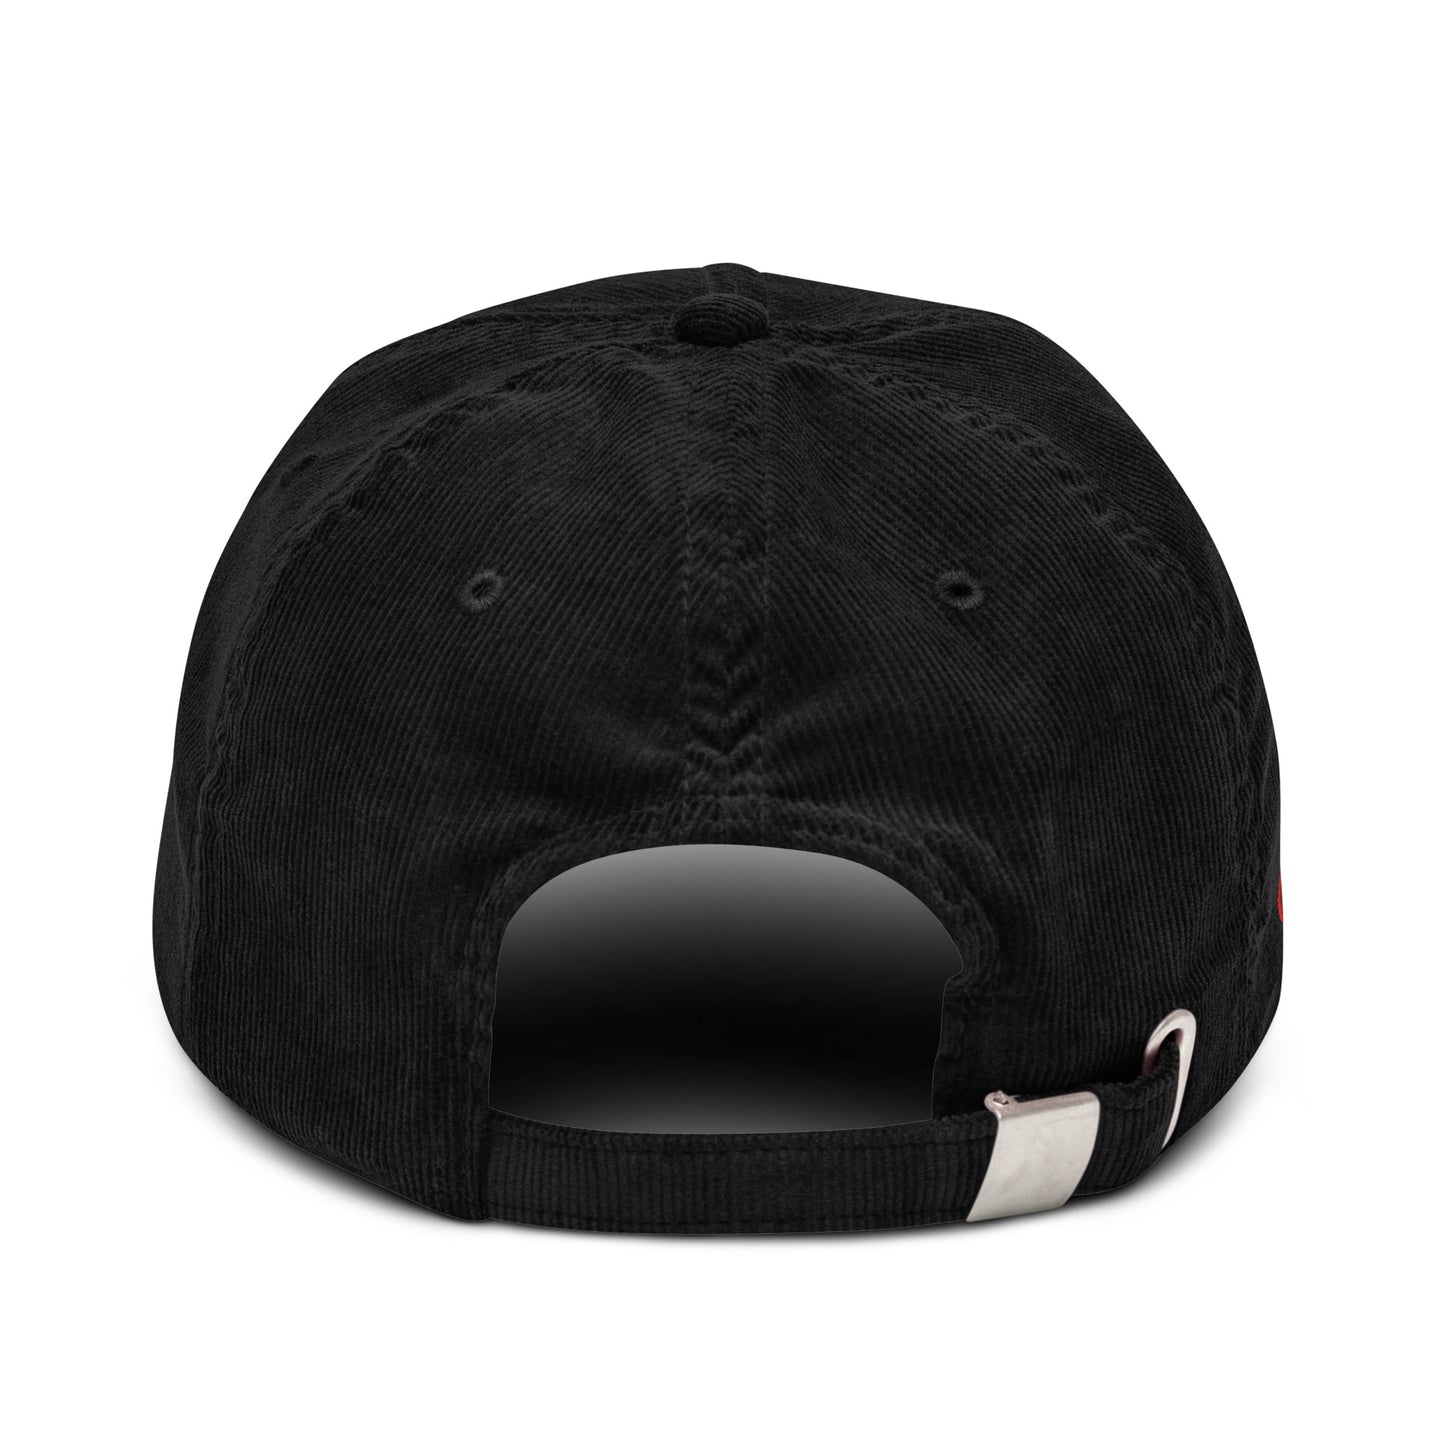 REHH - Corduroy hat (Black)